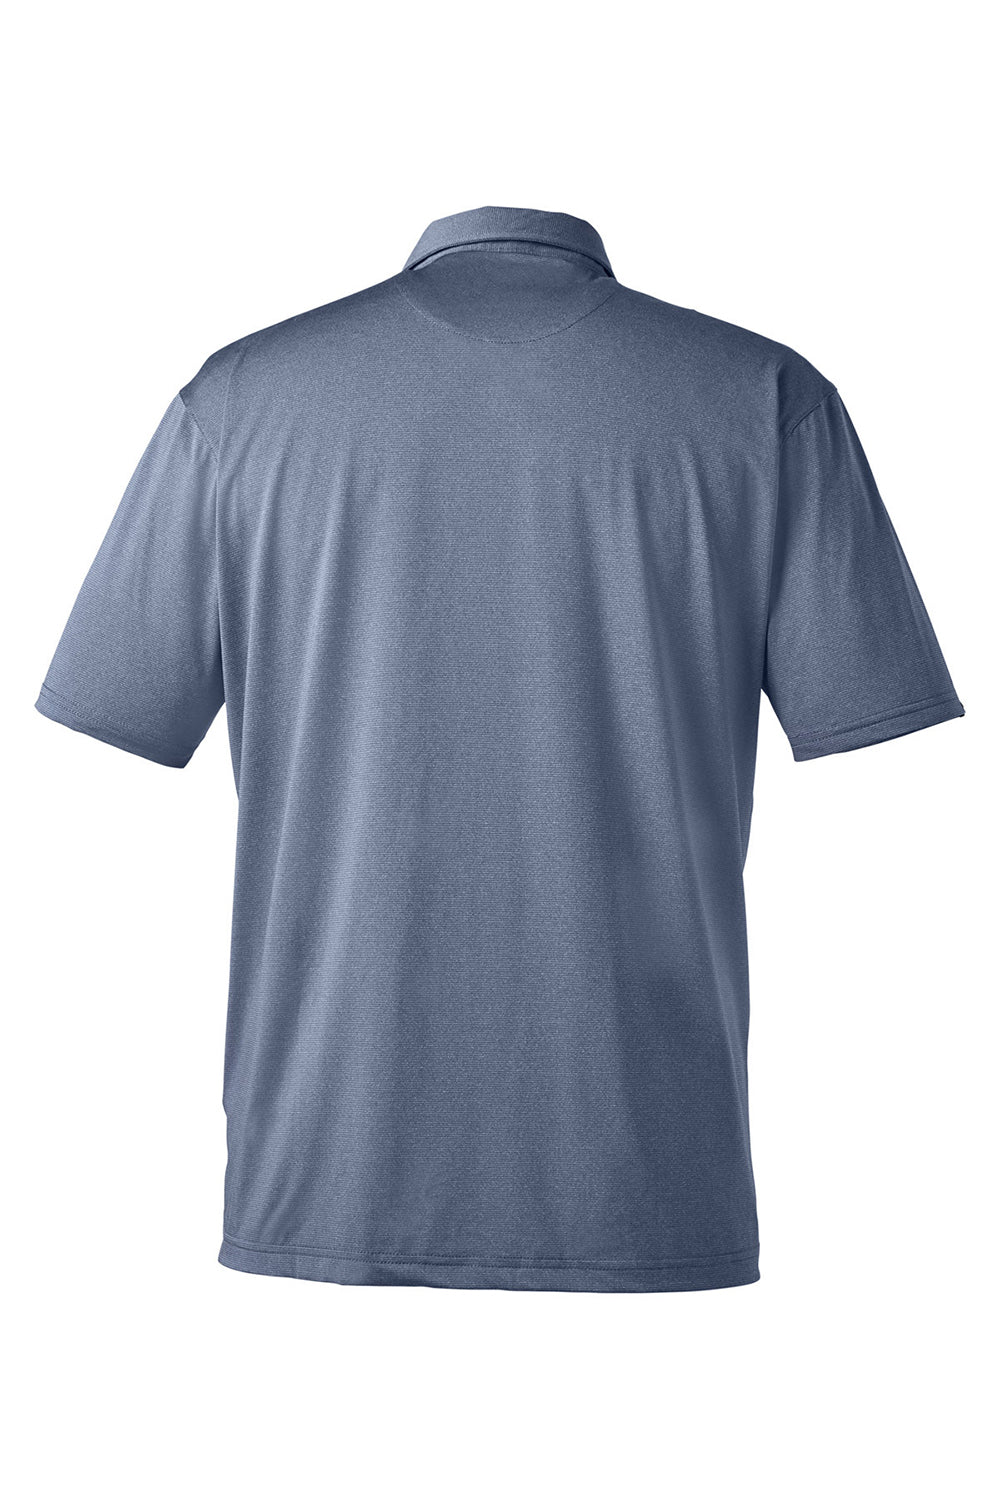 Swannies Golf SW1000 Mens Parker Short Sleeve Polo Shirt Navy Blue Flat Back